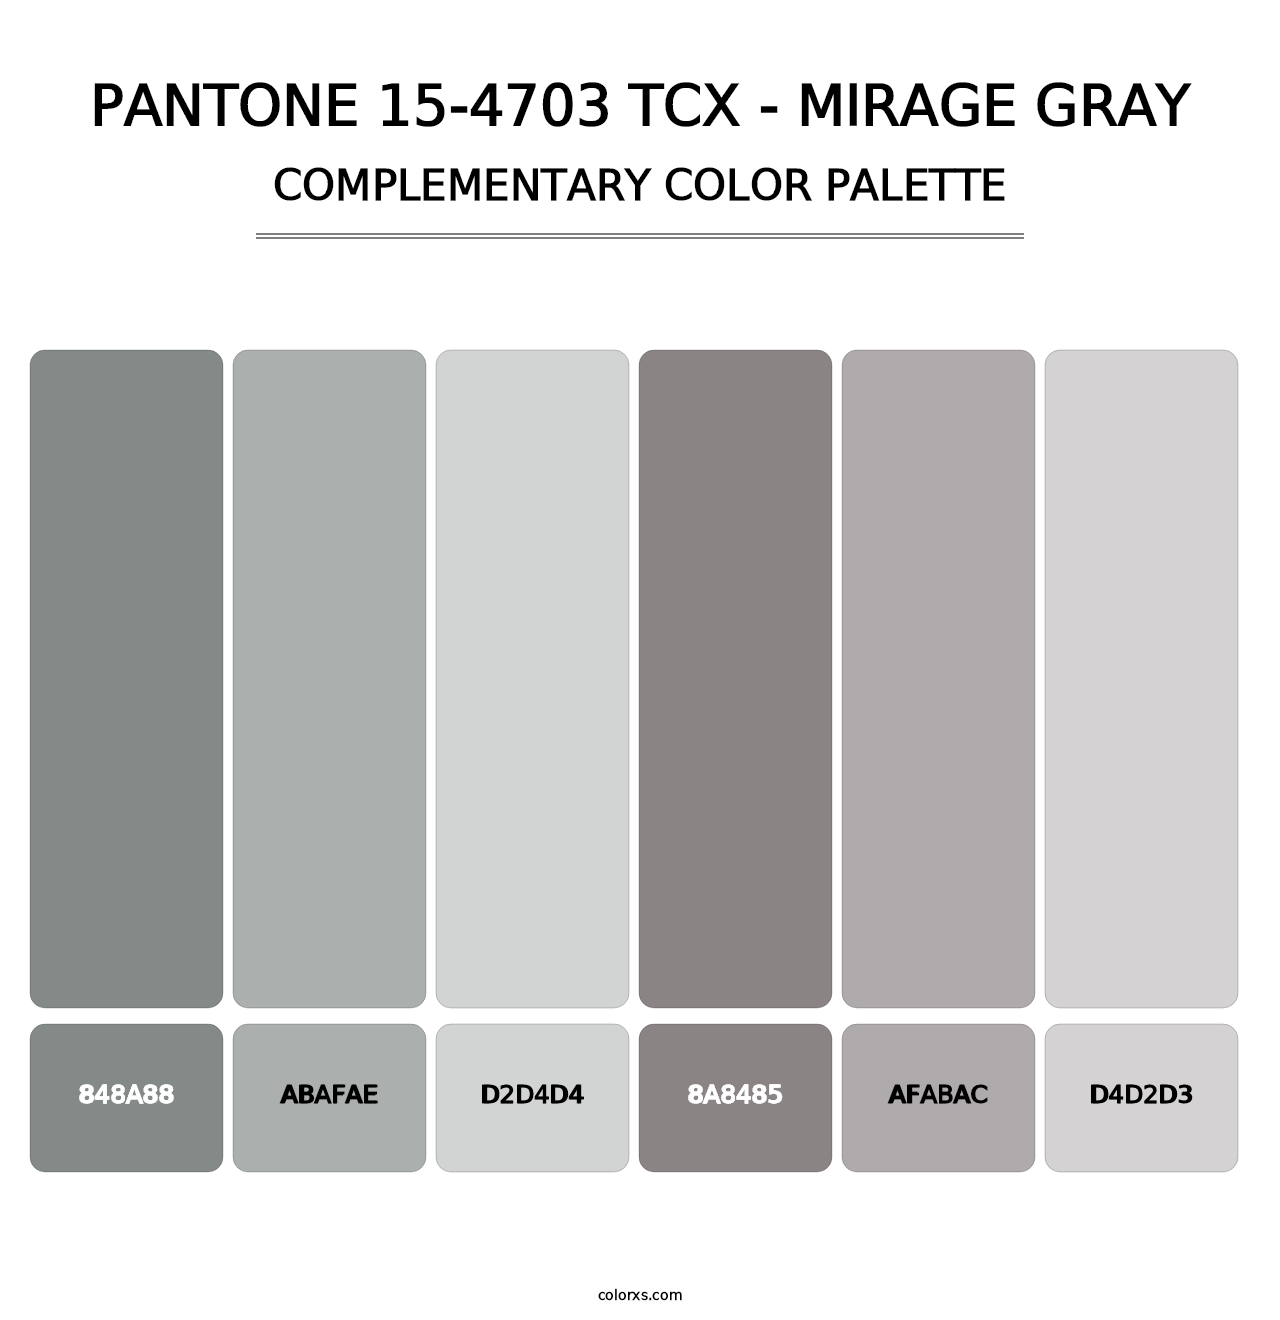 PANTONE 15-4703 TCX - Mirage Gray - Complementary Color Palette